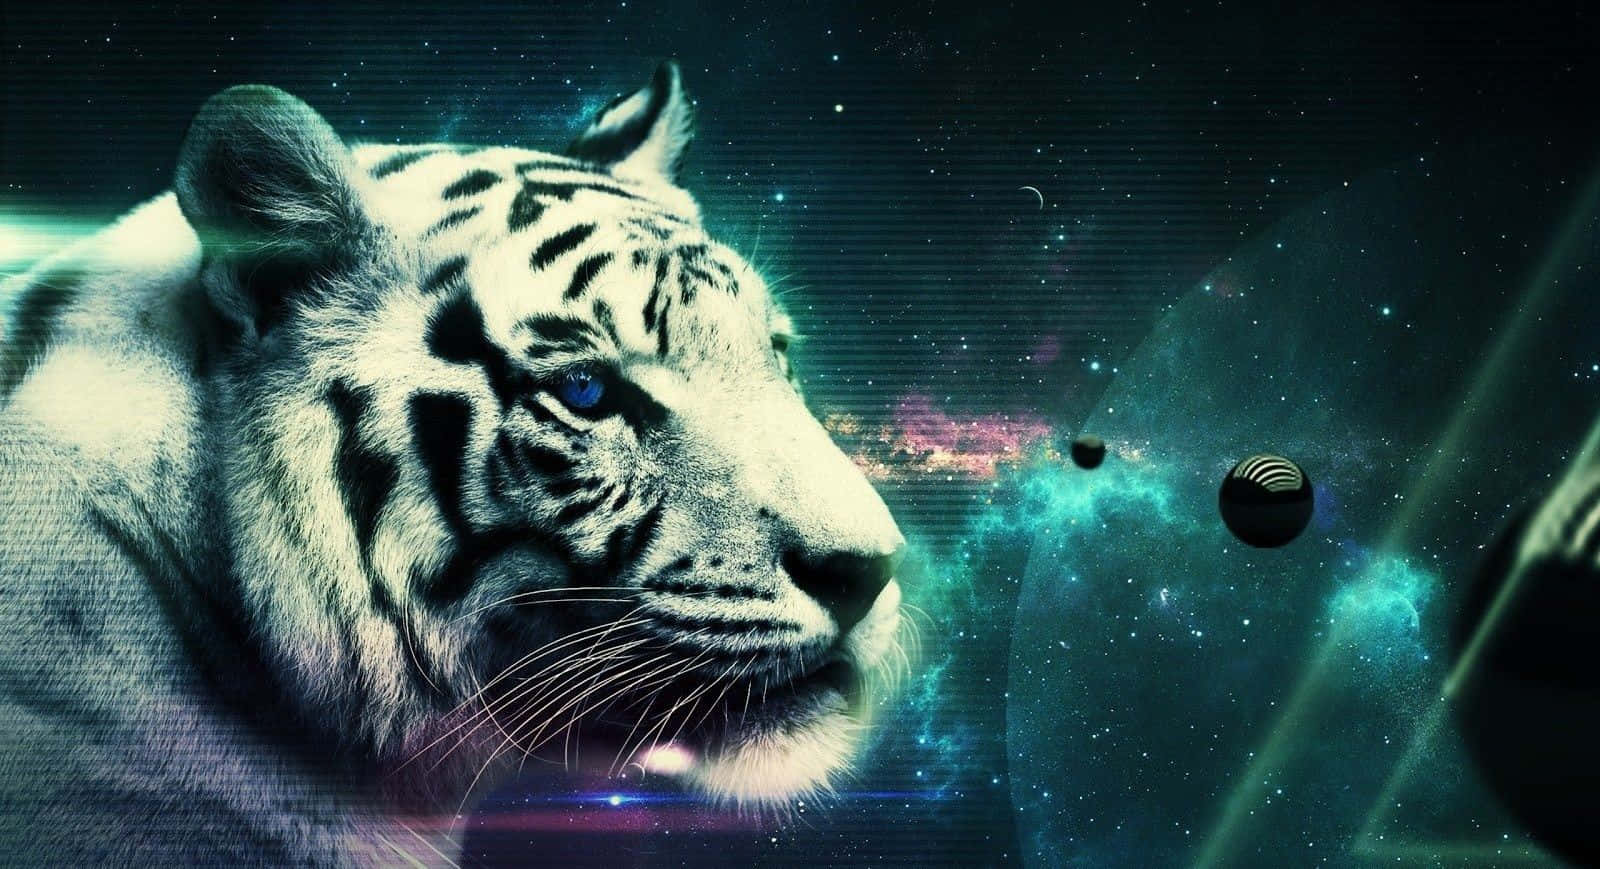 Majestic Tiger in a Cosmic Galaxy Wallpaper